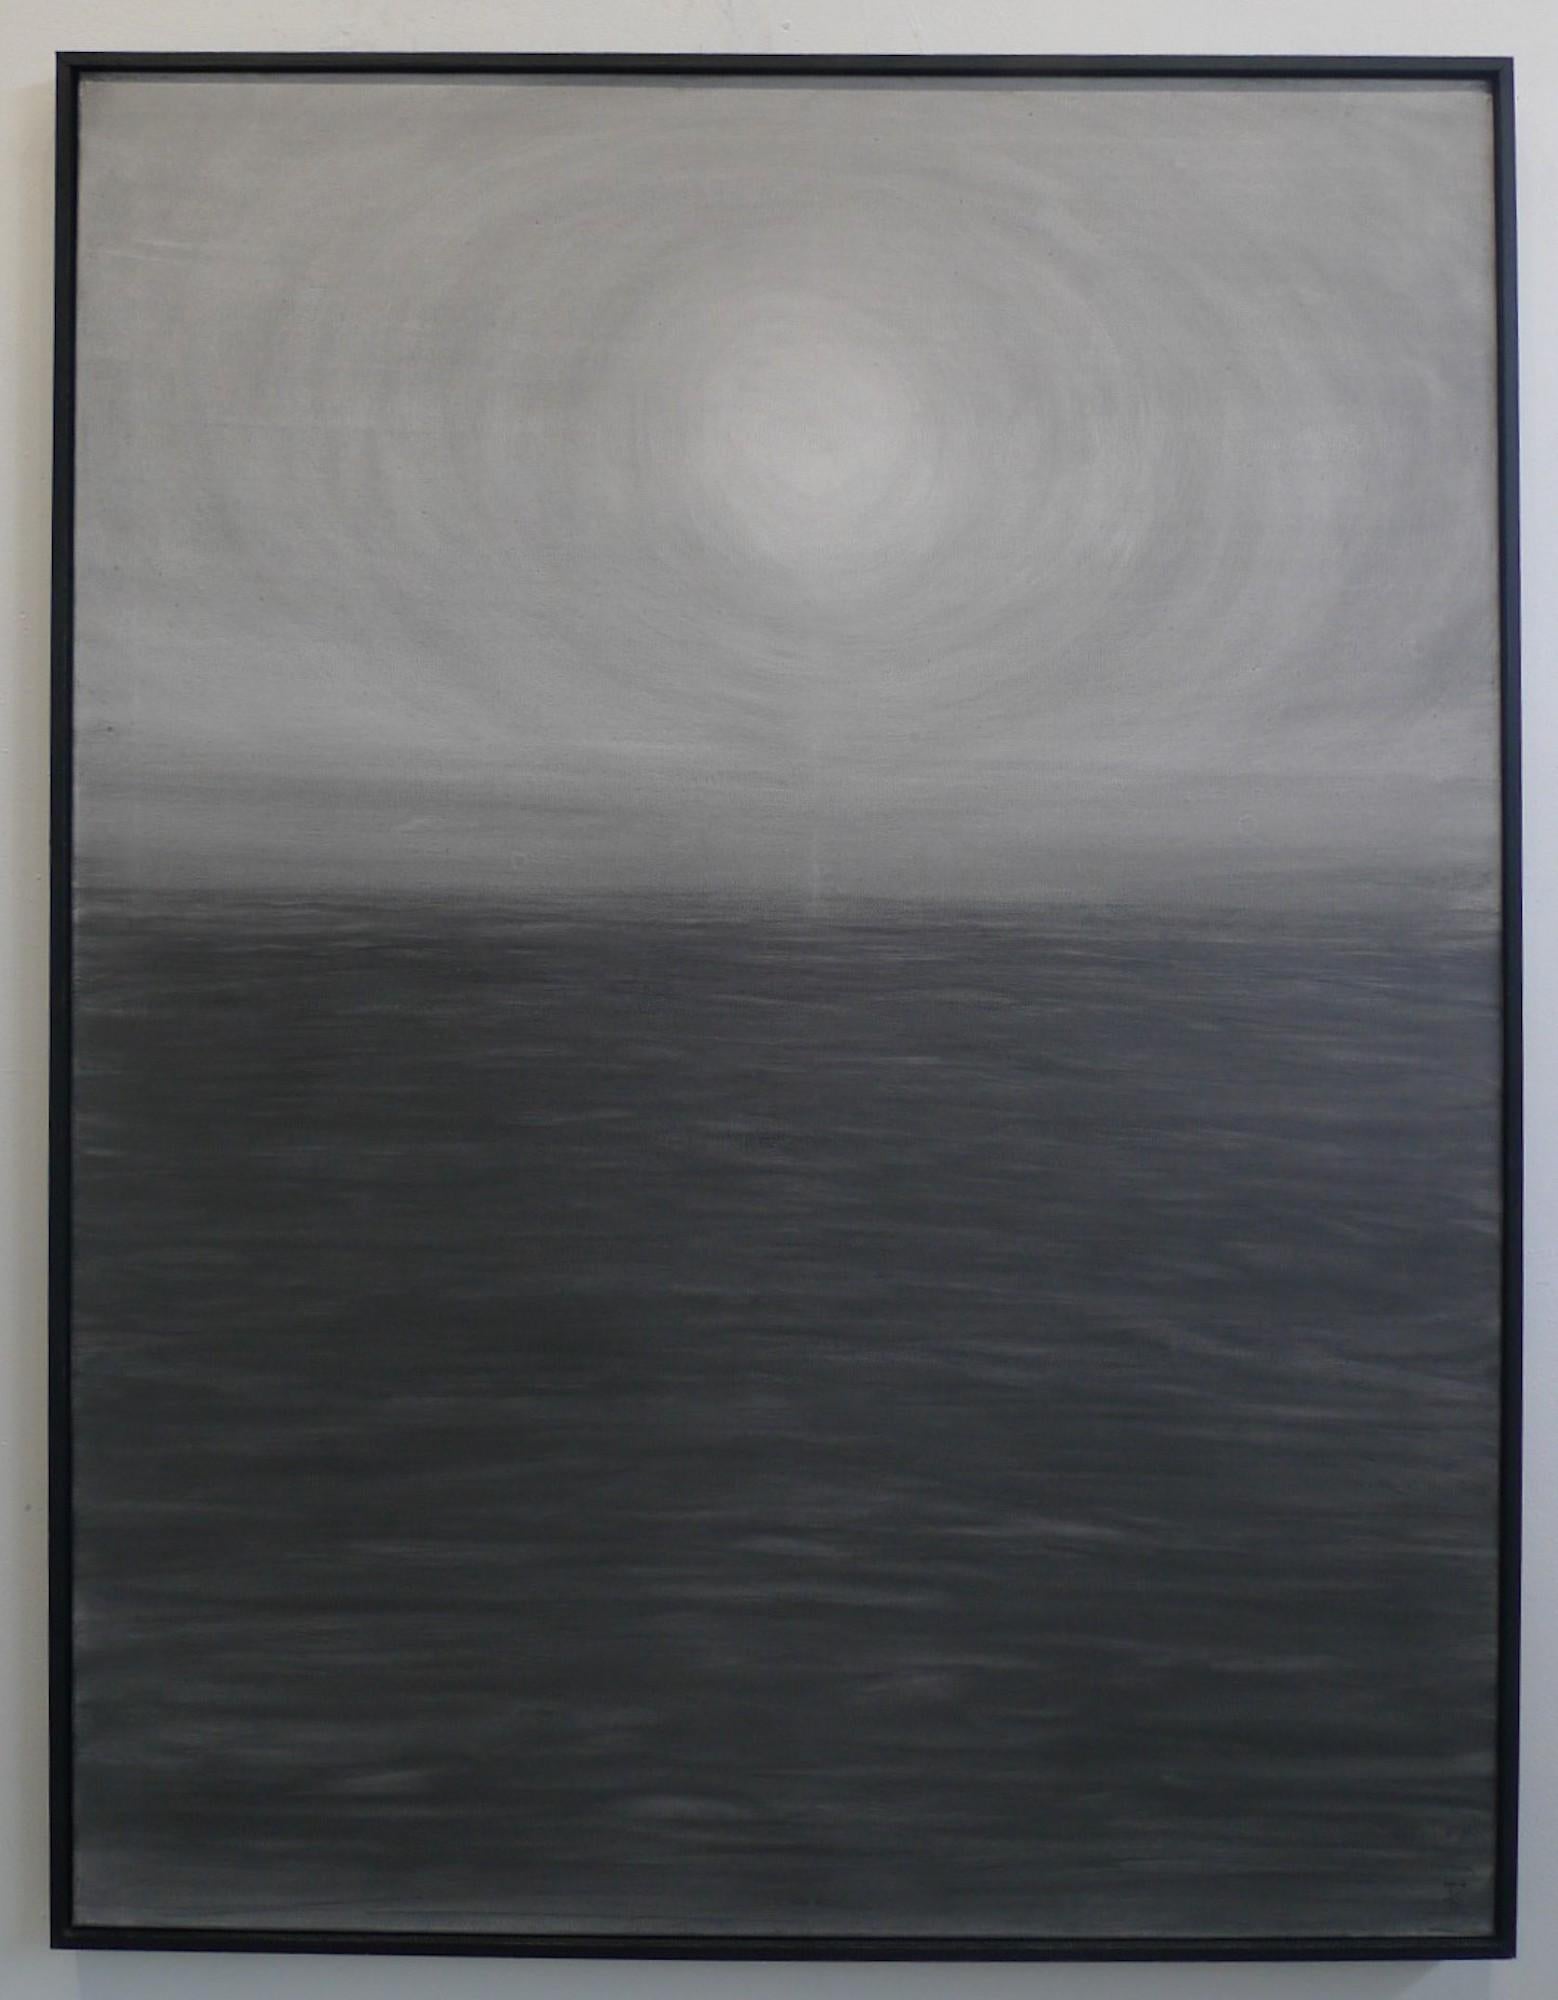 Astre by Franco Salas Borquez - Contemporary seascape painting, waves, dark tone For Sale 2